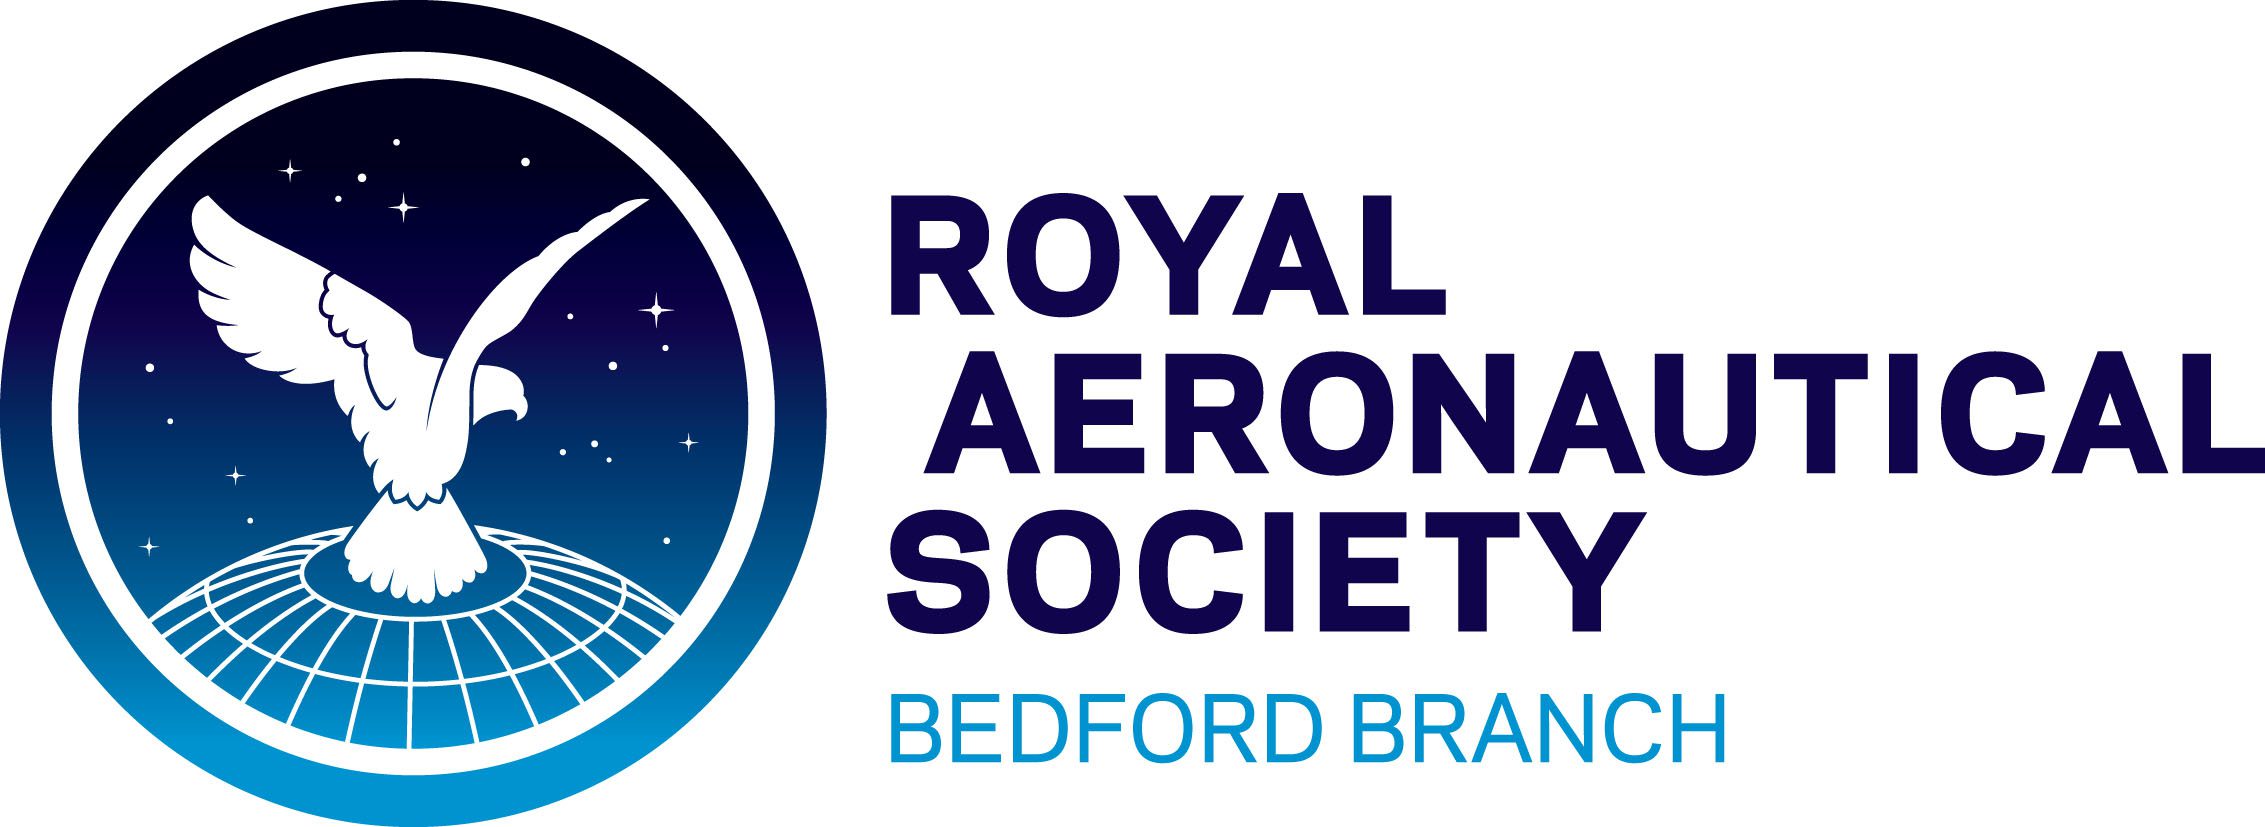 Royal Aeronautical Society Bedford Branch